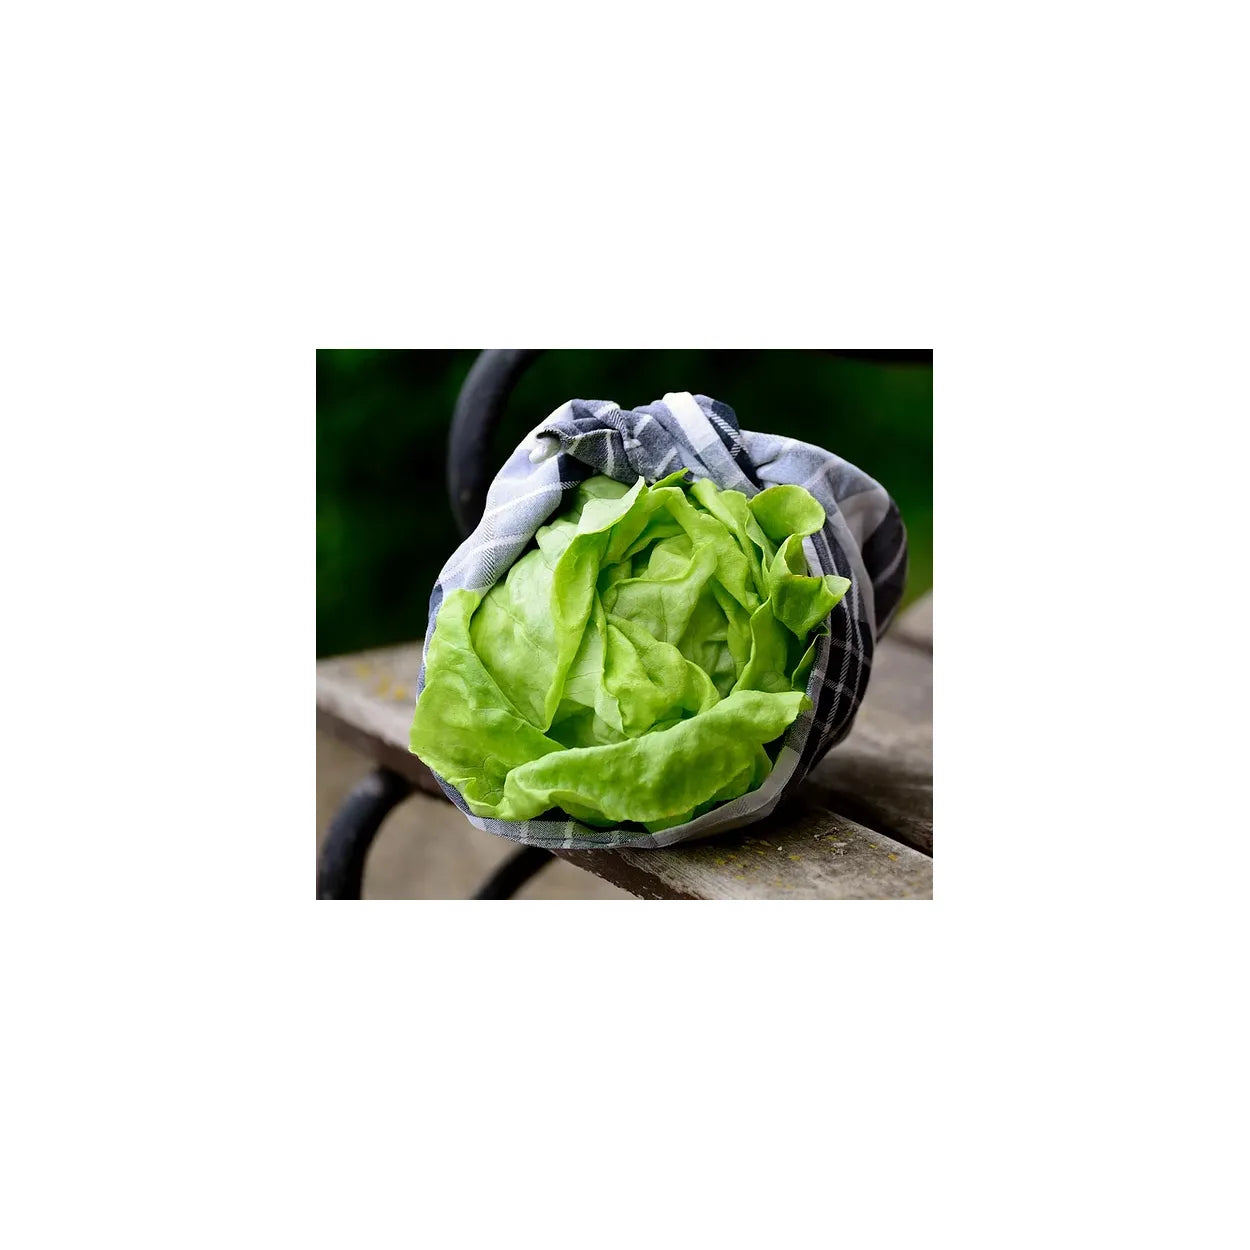 Brim Seed Co. - Bibb Butterhead Lettuce Greens Heirloom Seed